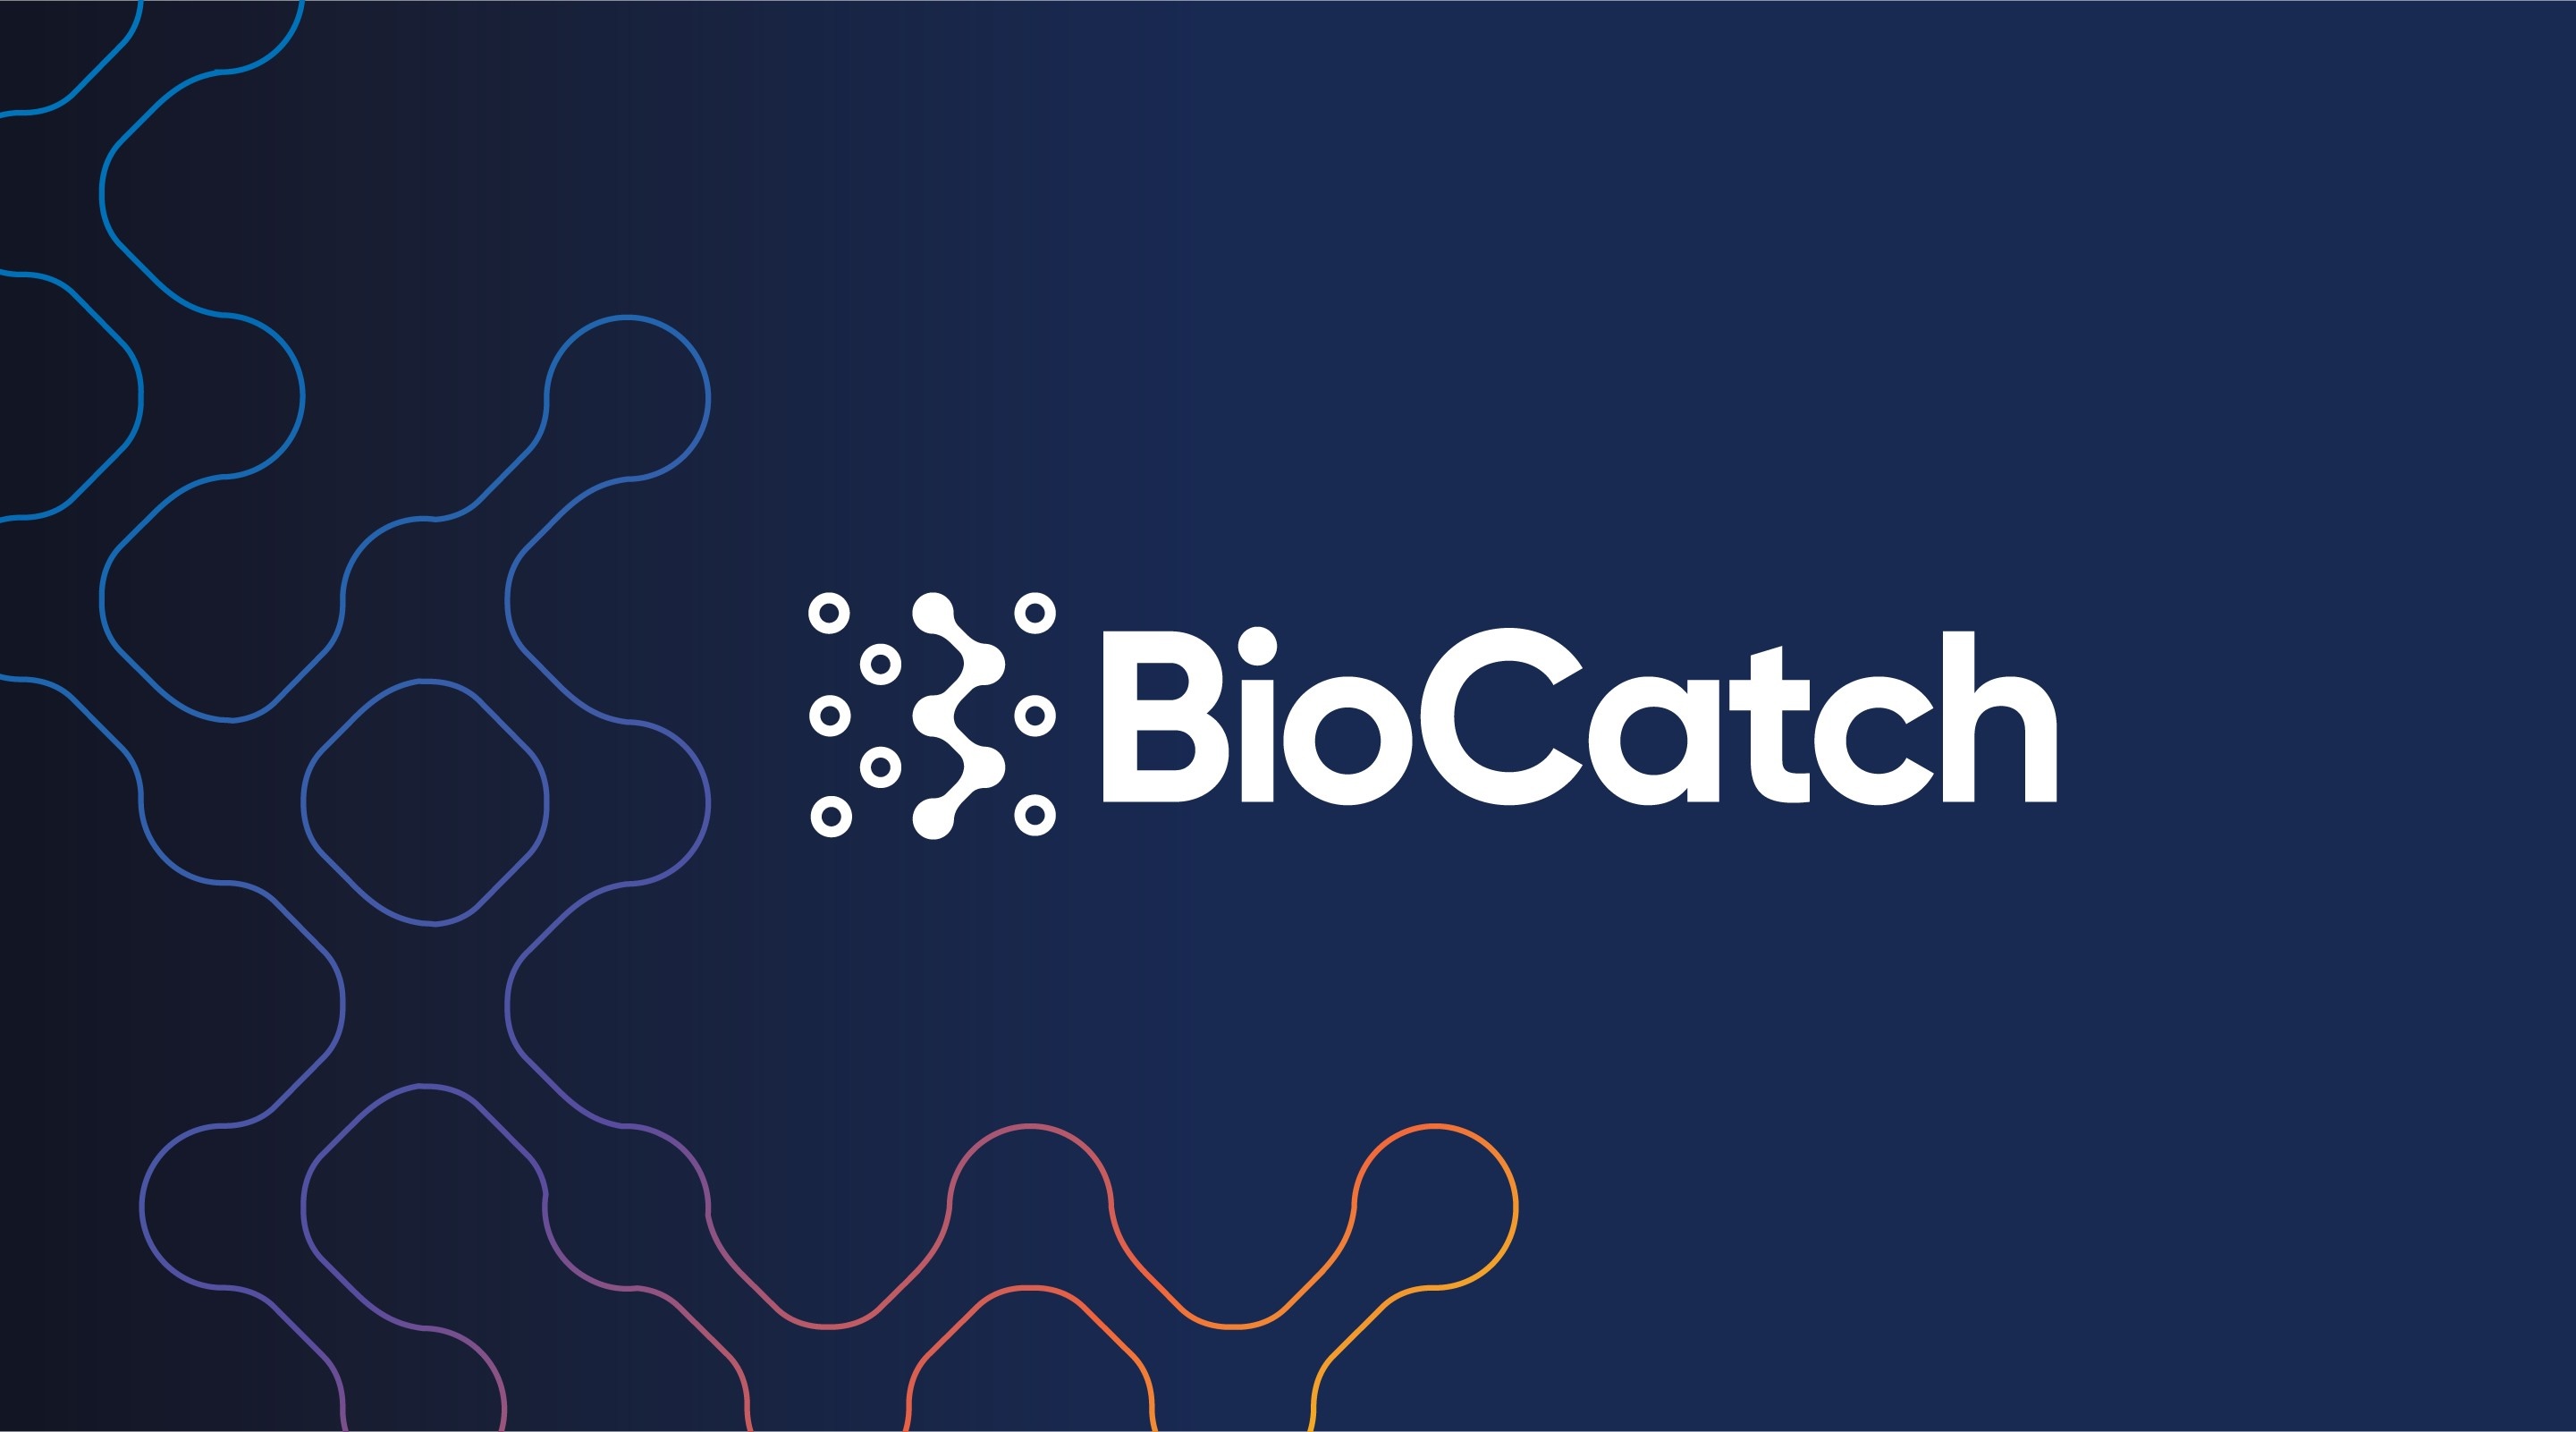 BioCatch nets returns for Bain Capital, Maverick at $1.3b valuation